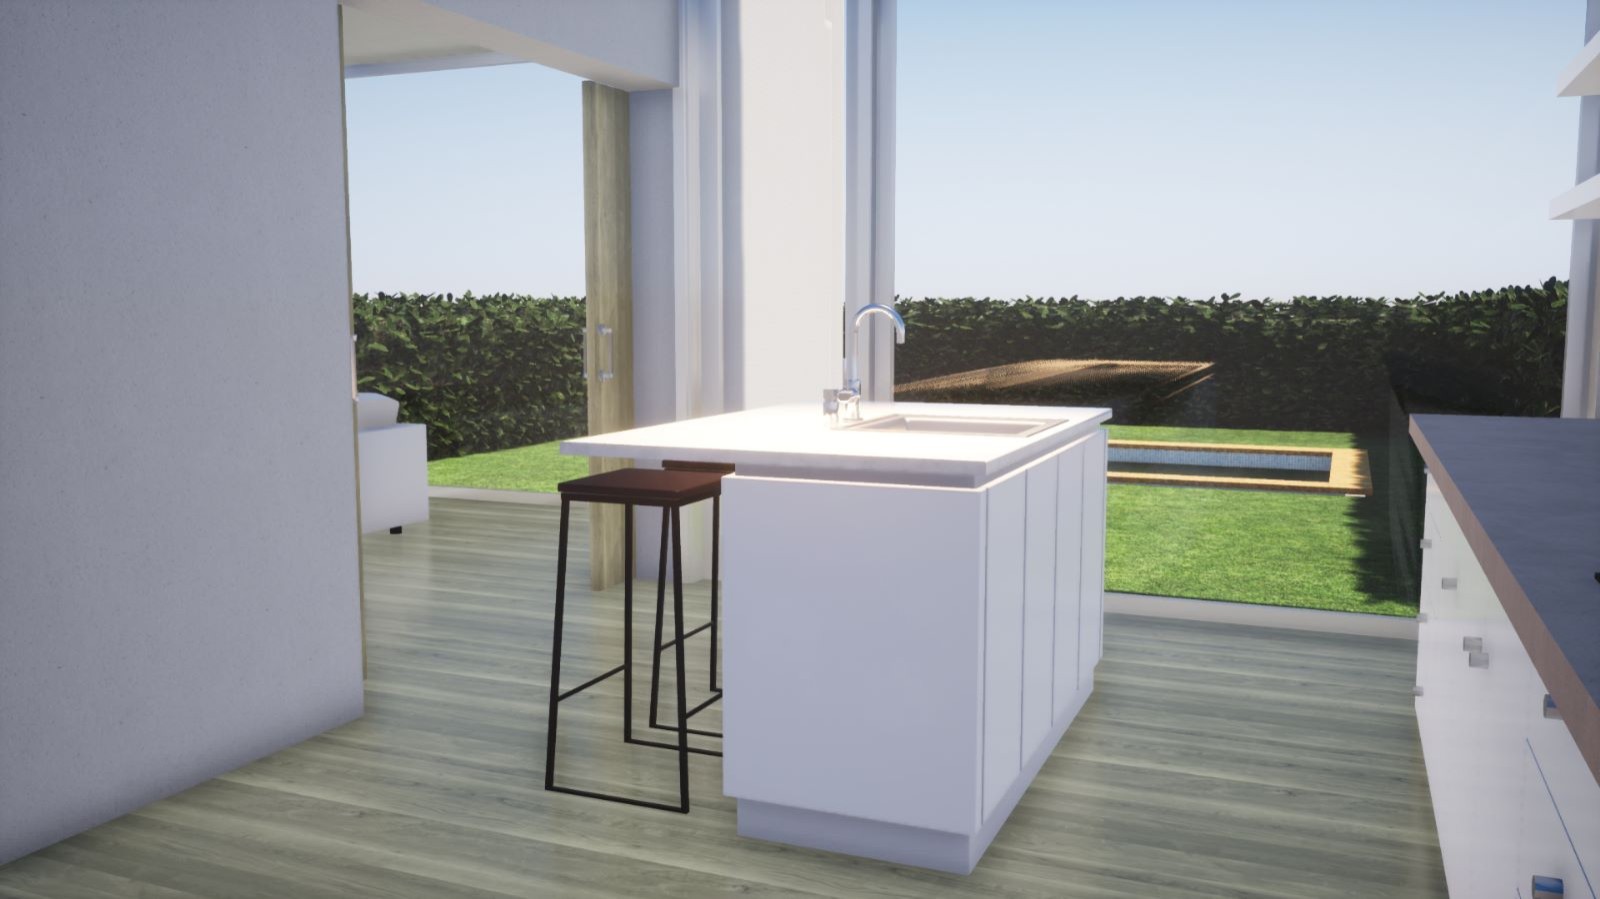 4 bedroom villa, new construction with seaview, for sale in Tavira, Algarve_228025